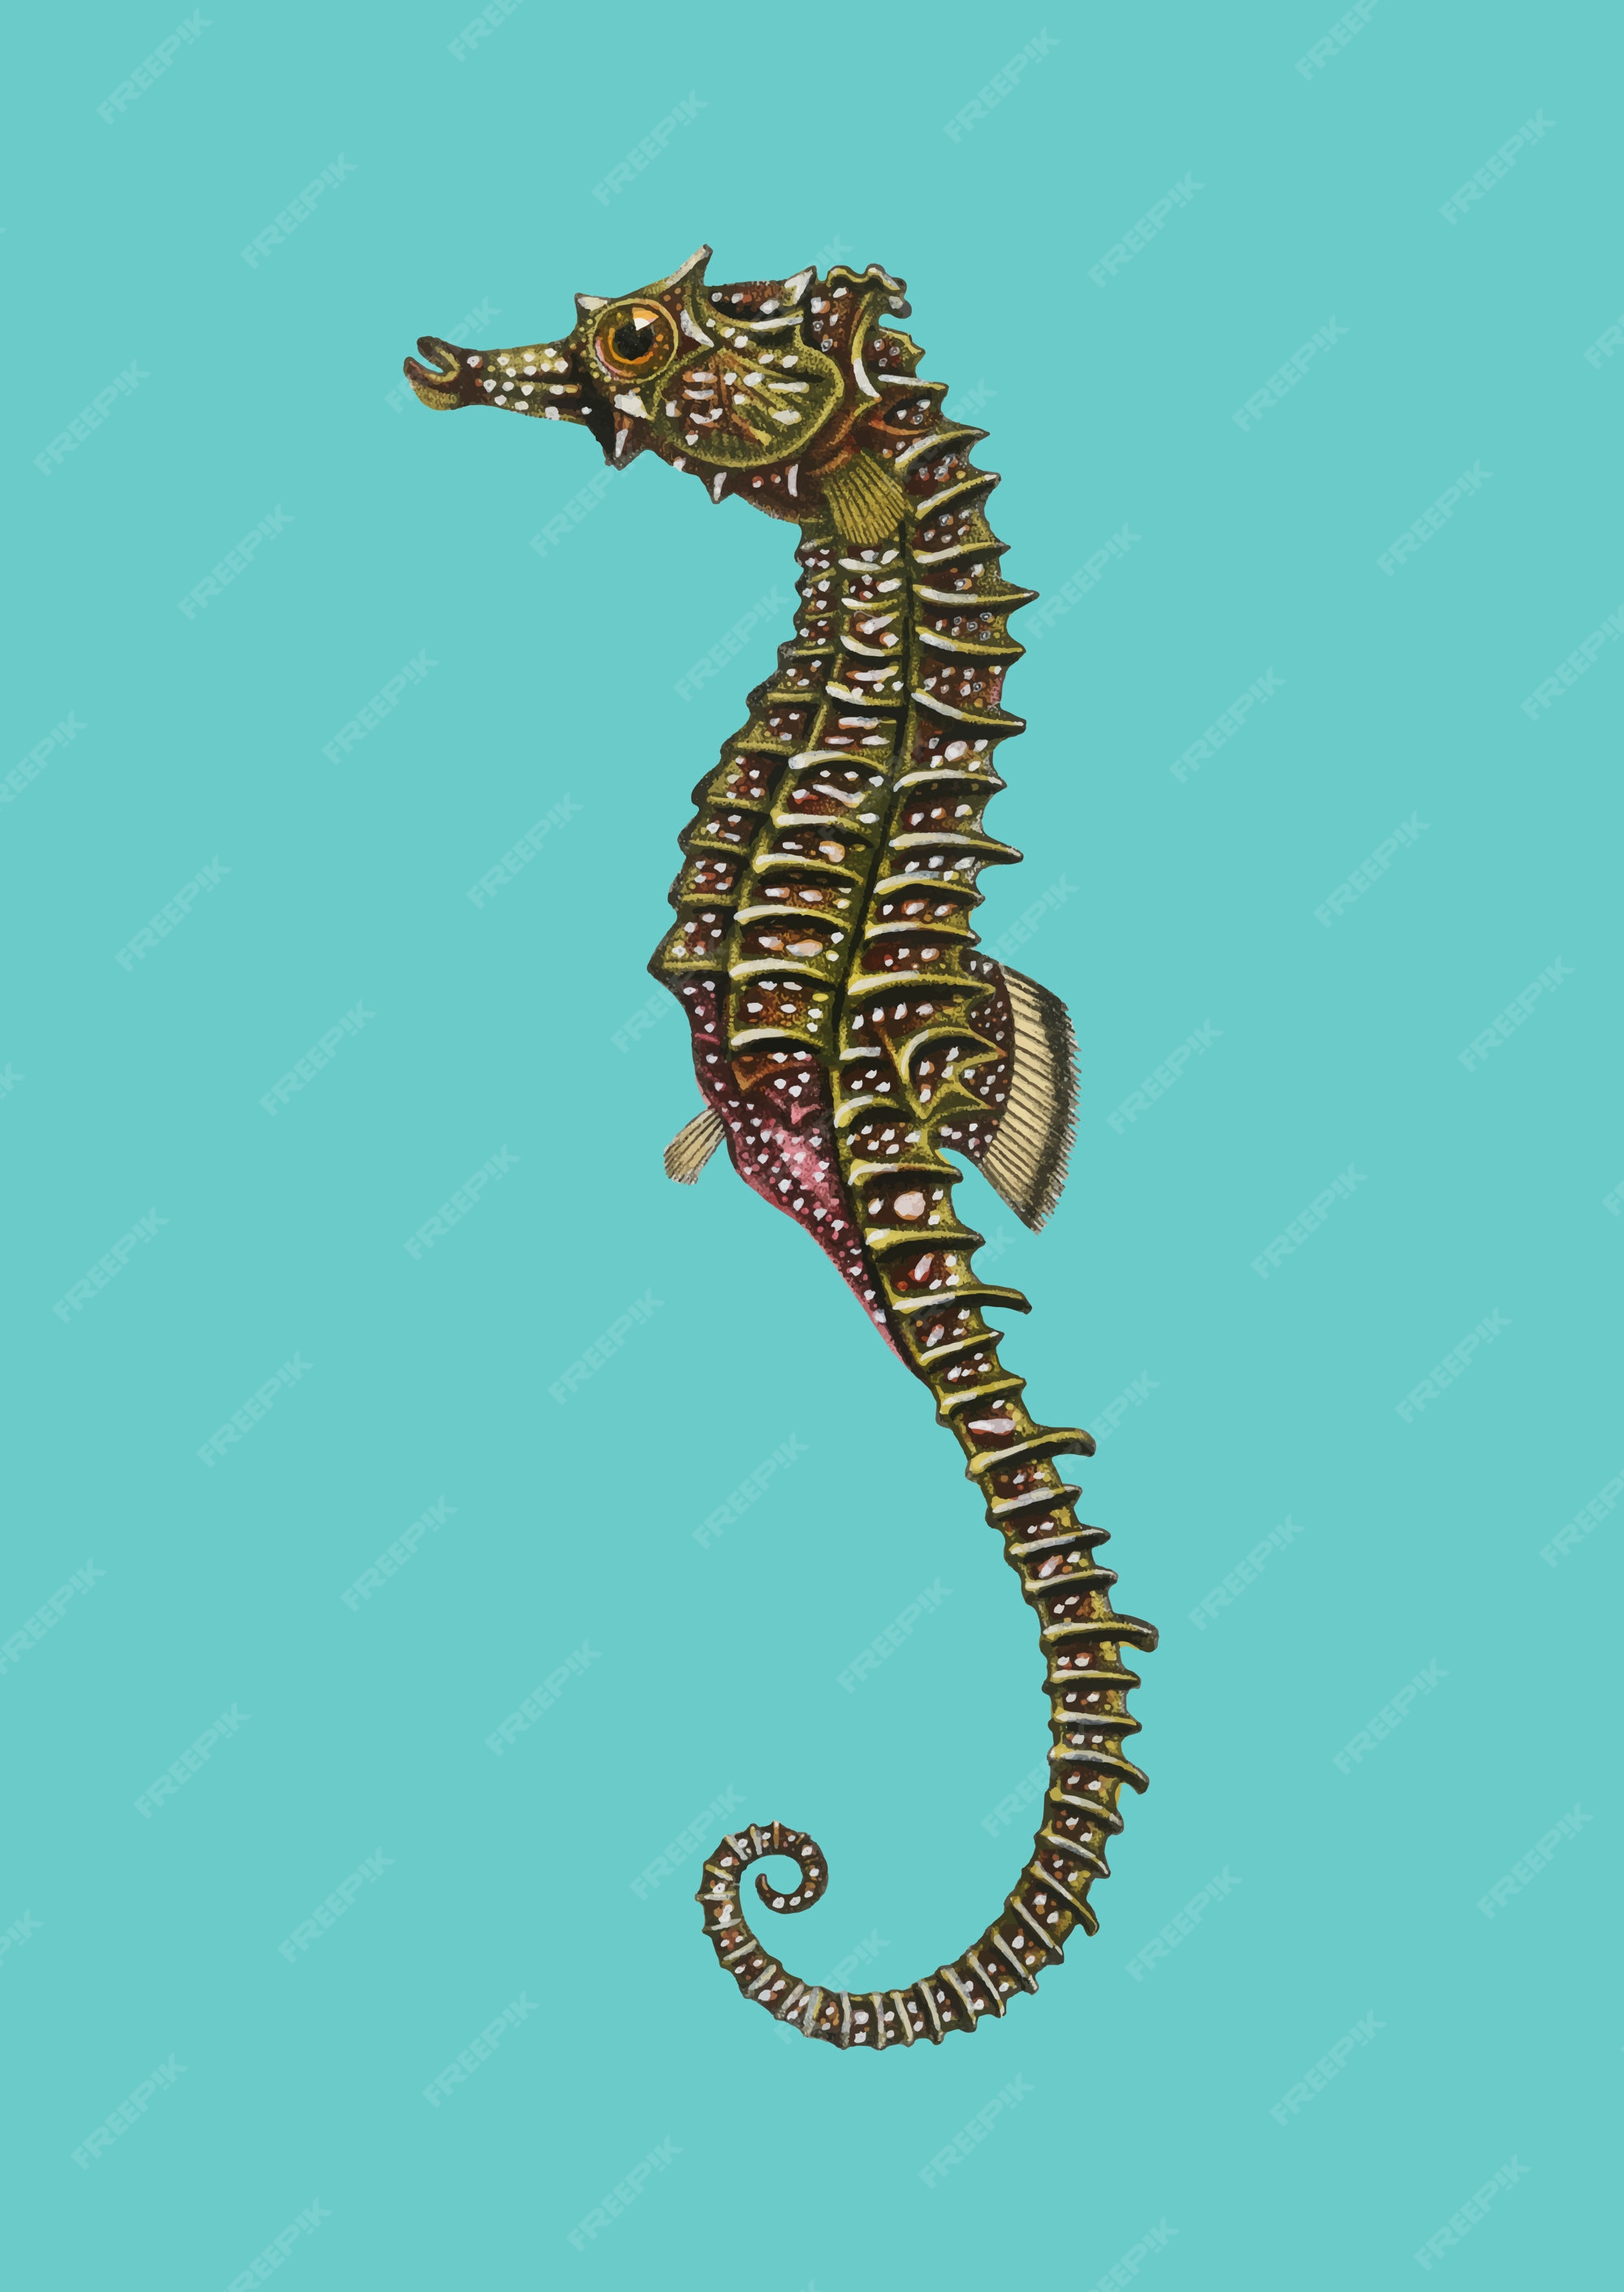 Seahorses Vectors & Illustrations for Free Download | Freepik